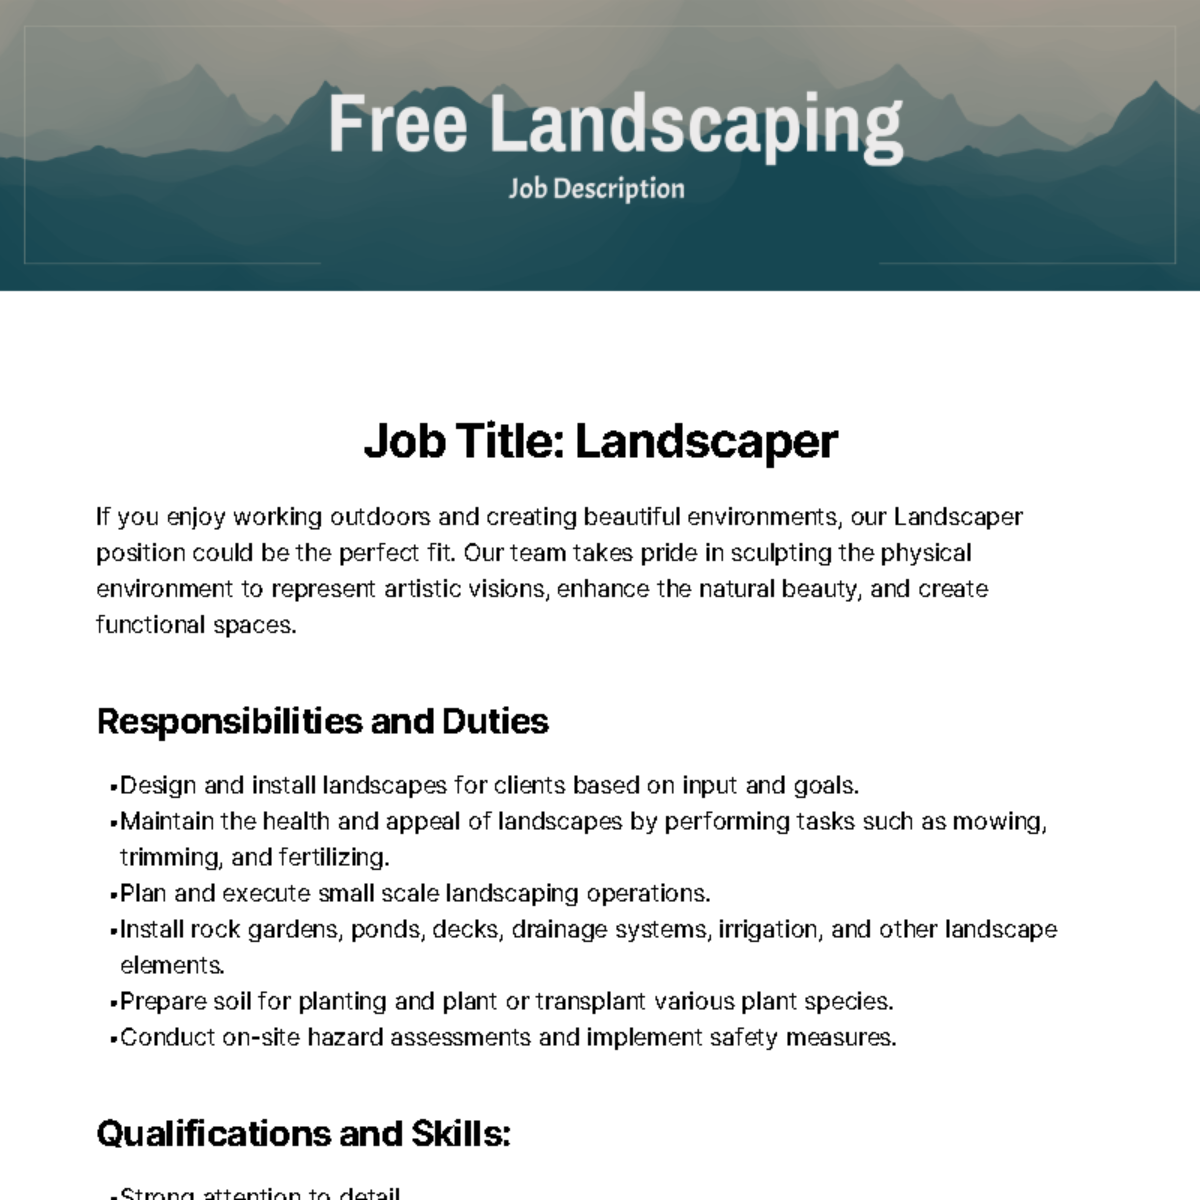 Free Landscaping Job Description Template